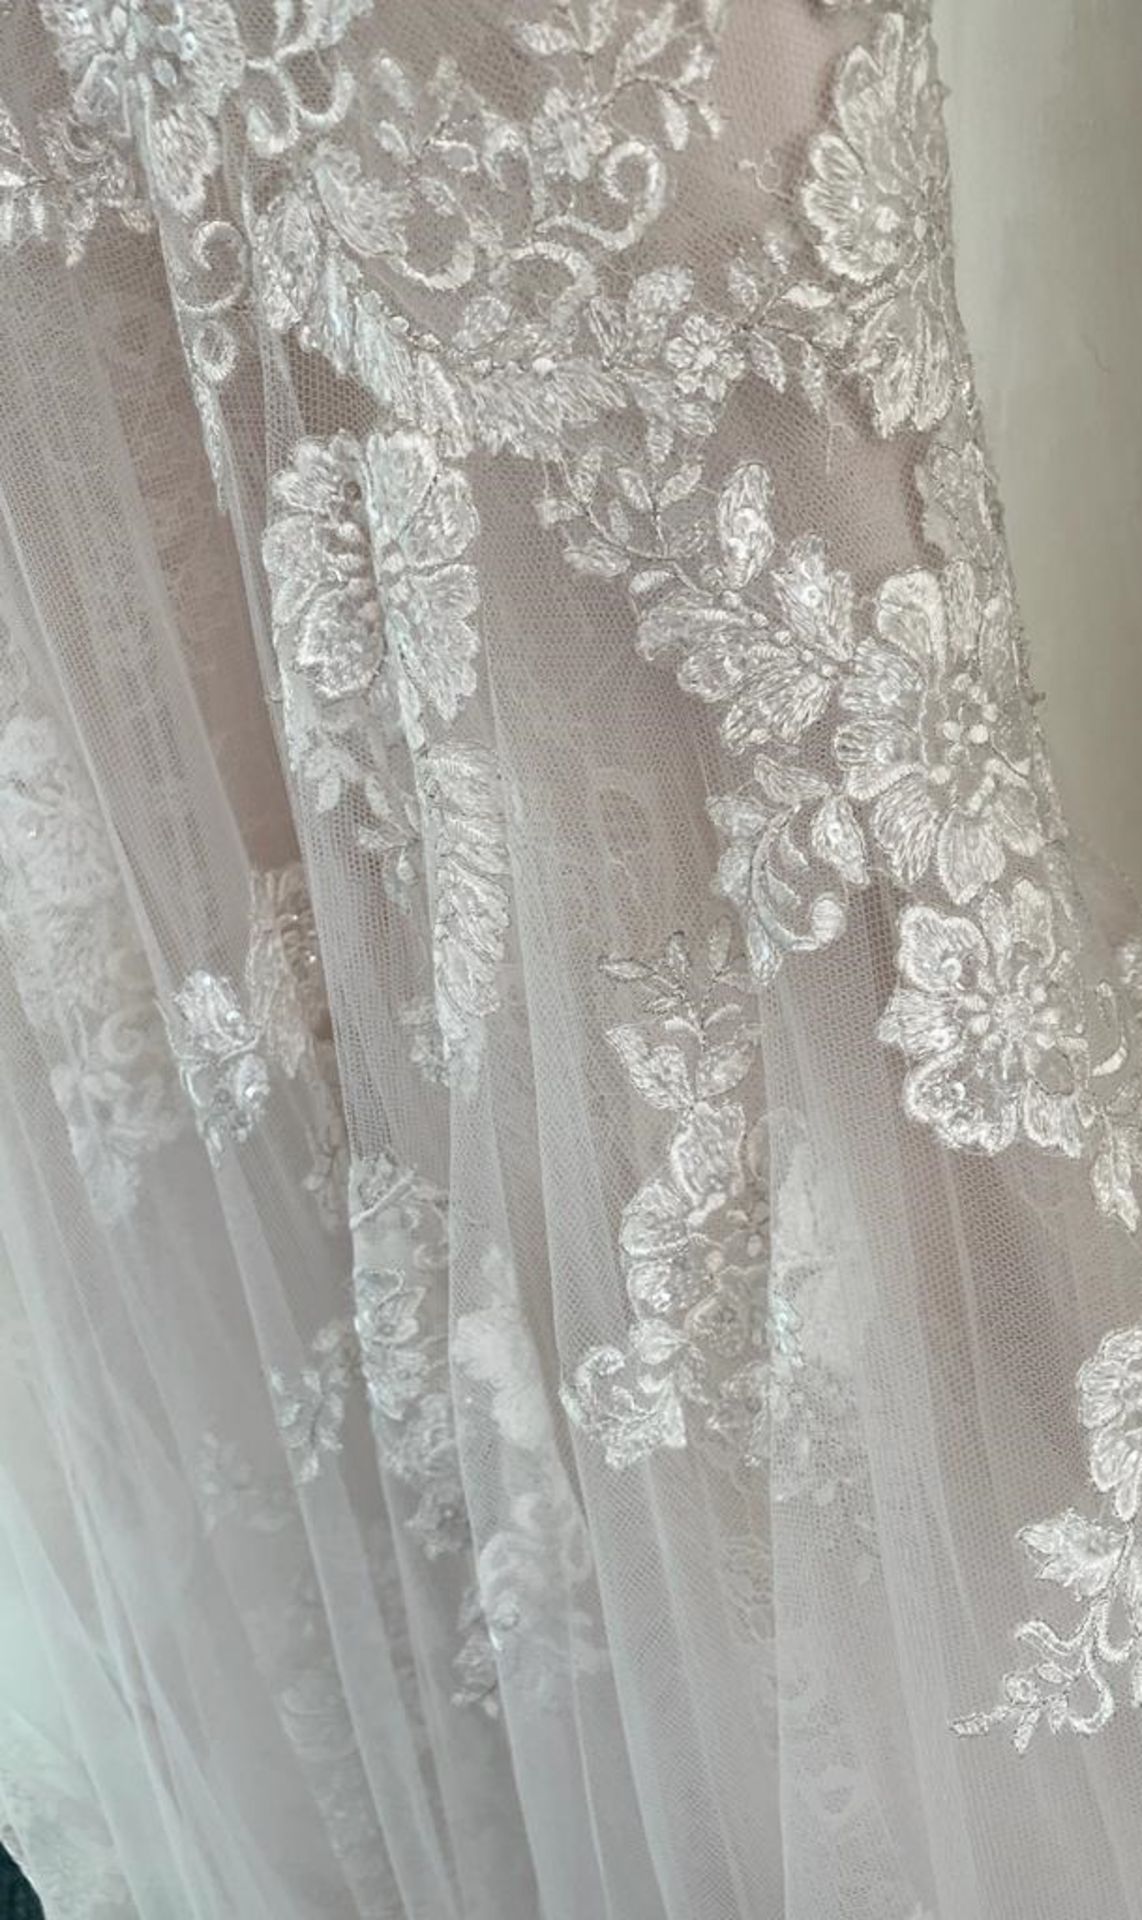 1 x DIANA LEGRANDE '7517' Designer Wedding Dress Bridal Gown - Size: UK 10 - Original RRP £1,800 - Image 7 of 18